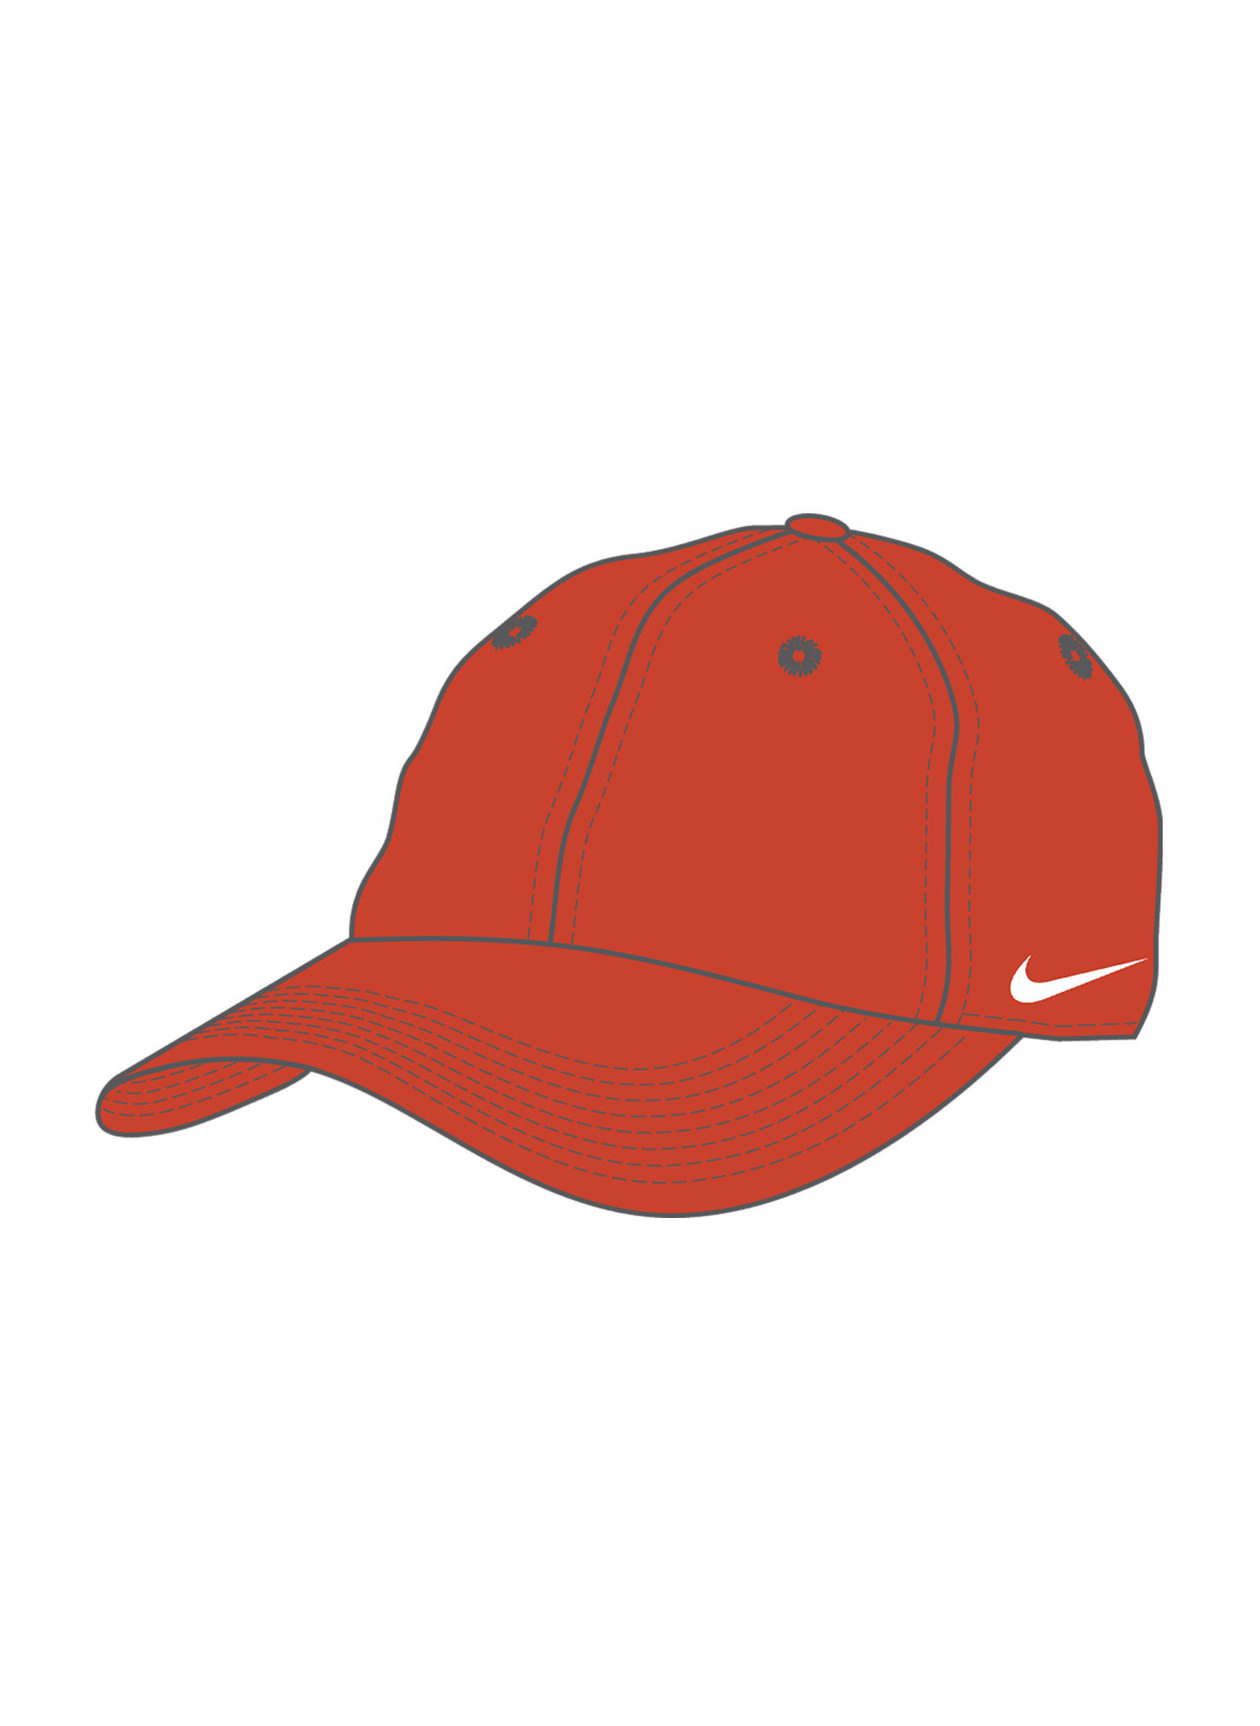 Nike Team Orange / White Team Campus Hat